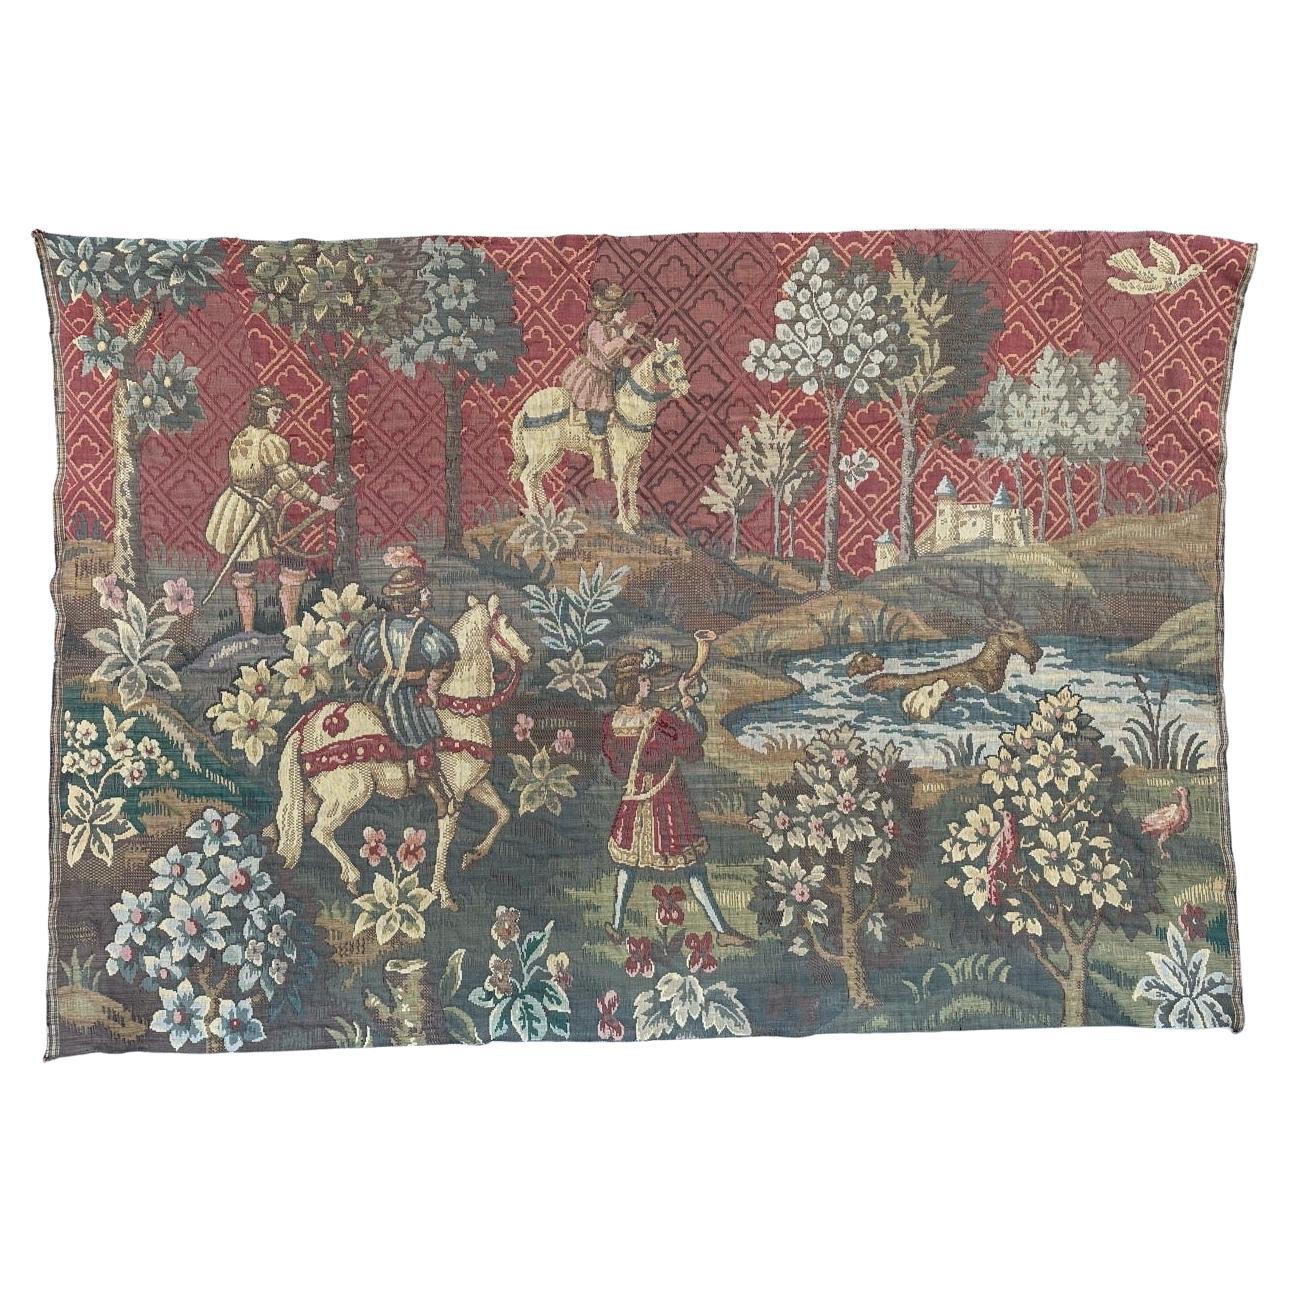 Bobyrug’s Nice Vintage Aubusson Style Jaquar Tapestry